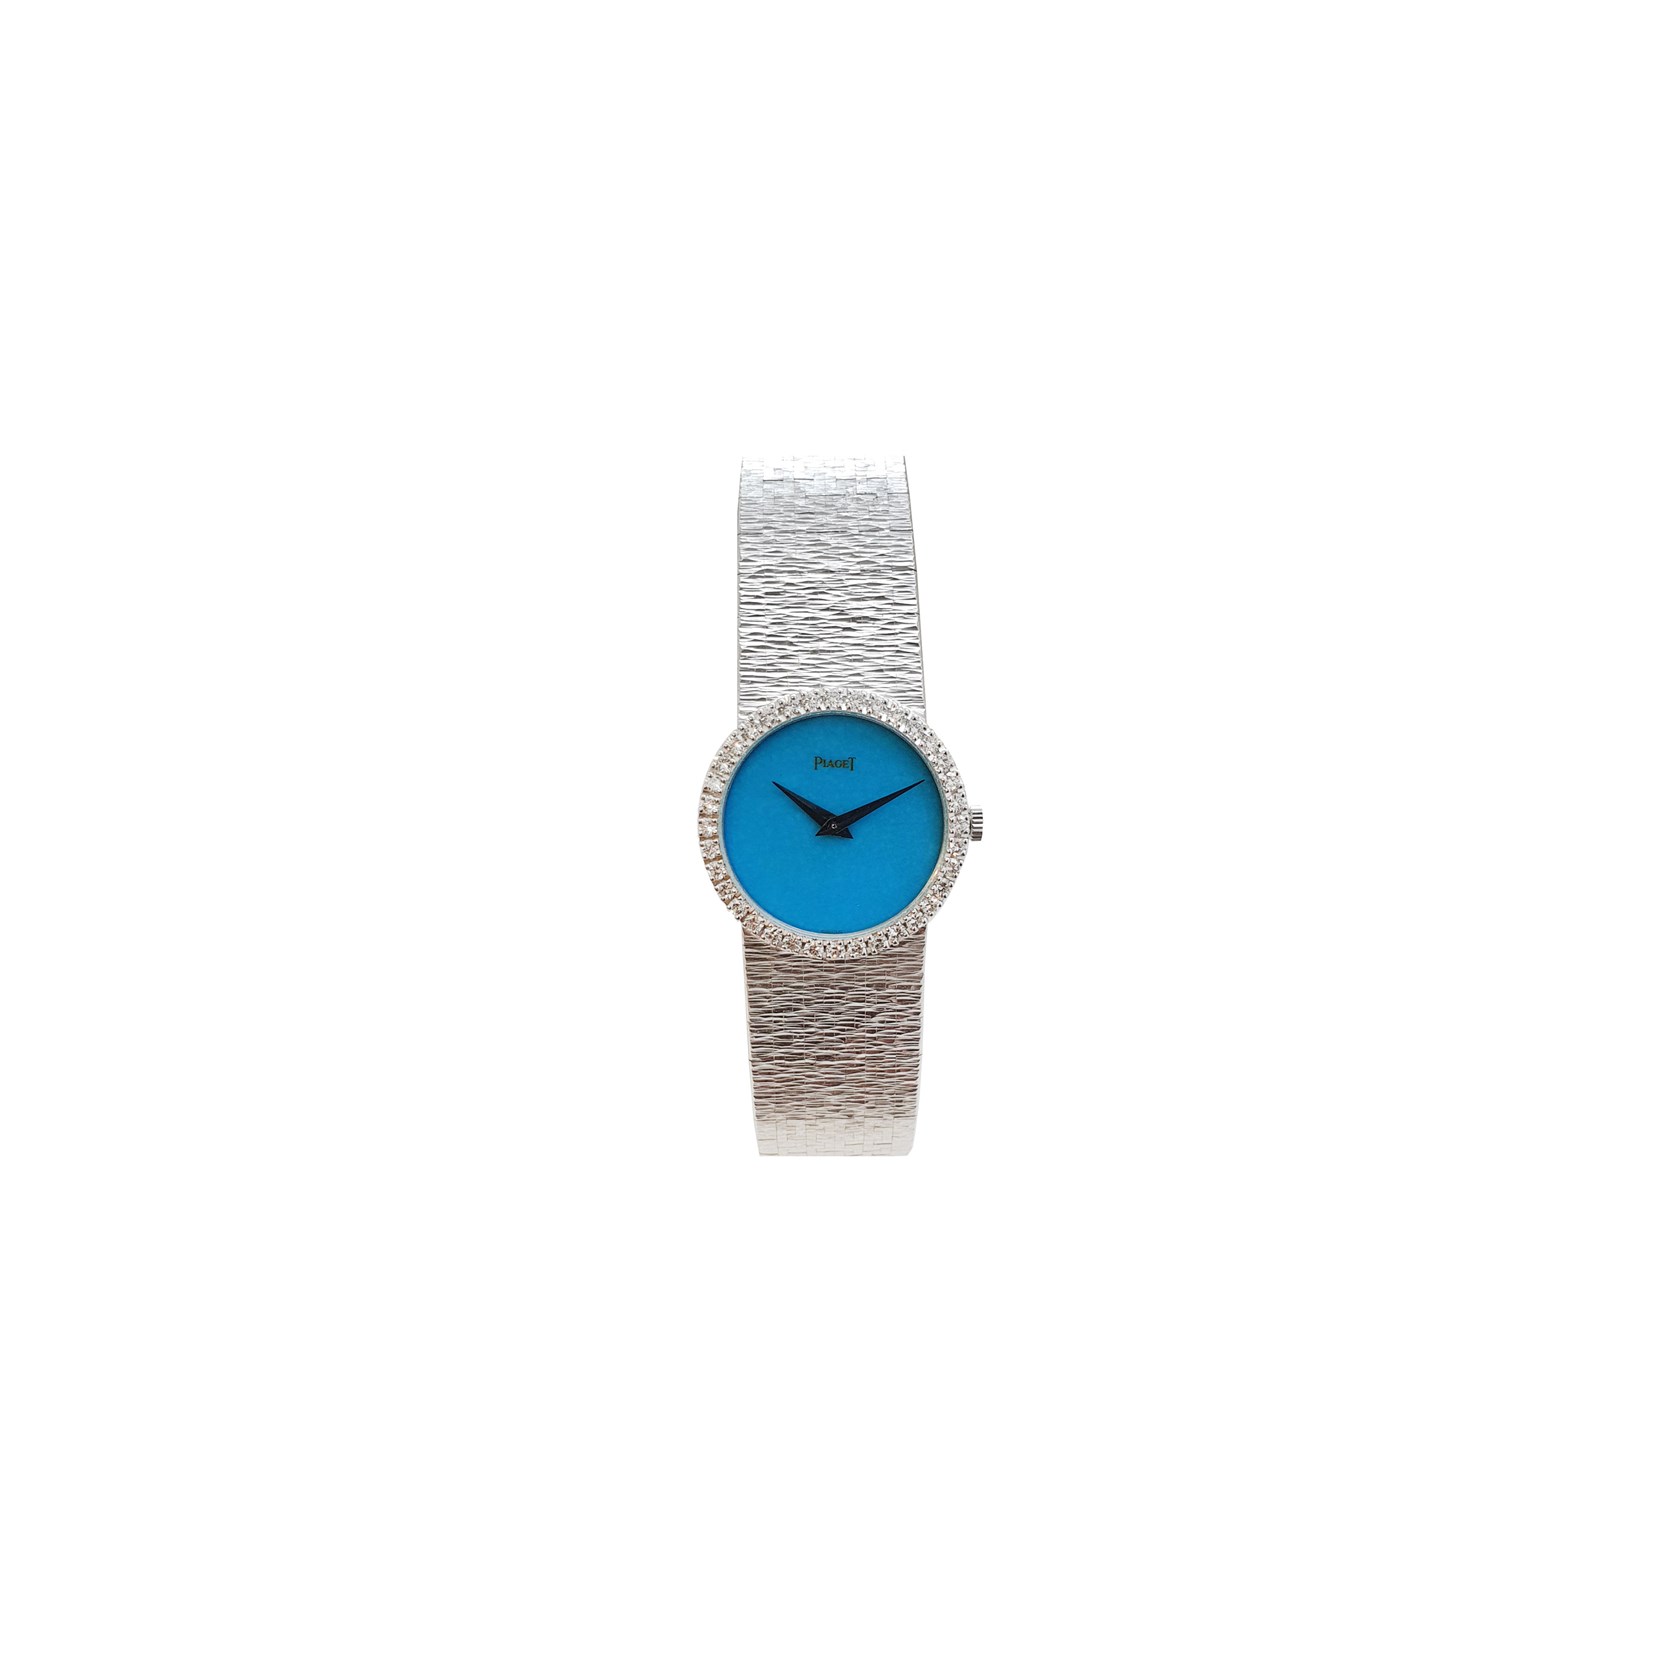 Piaget Ladies Vintage Watch - Turquoise